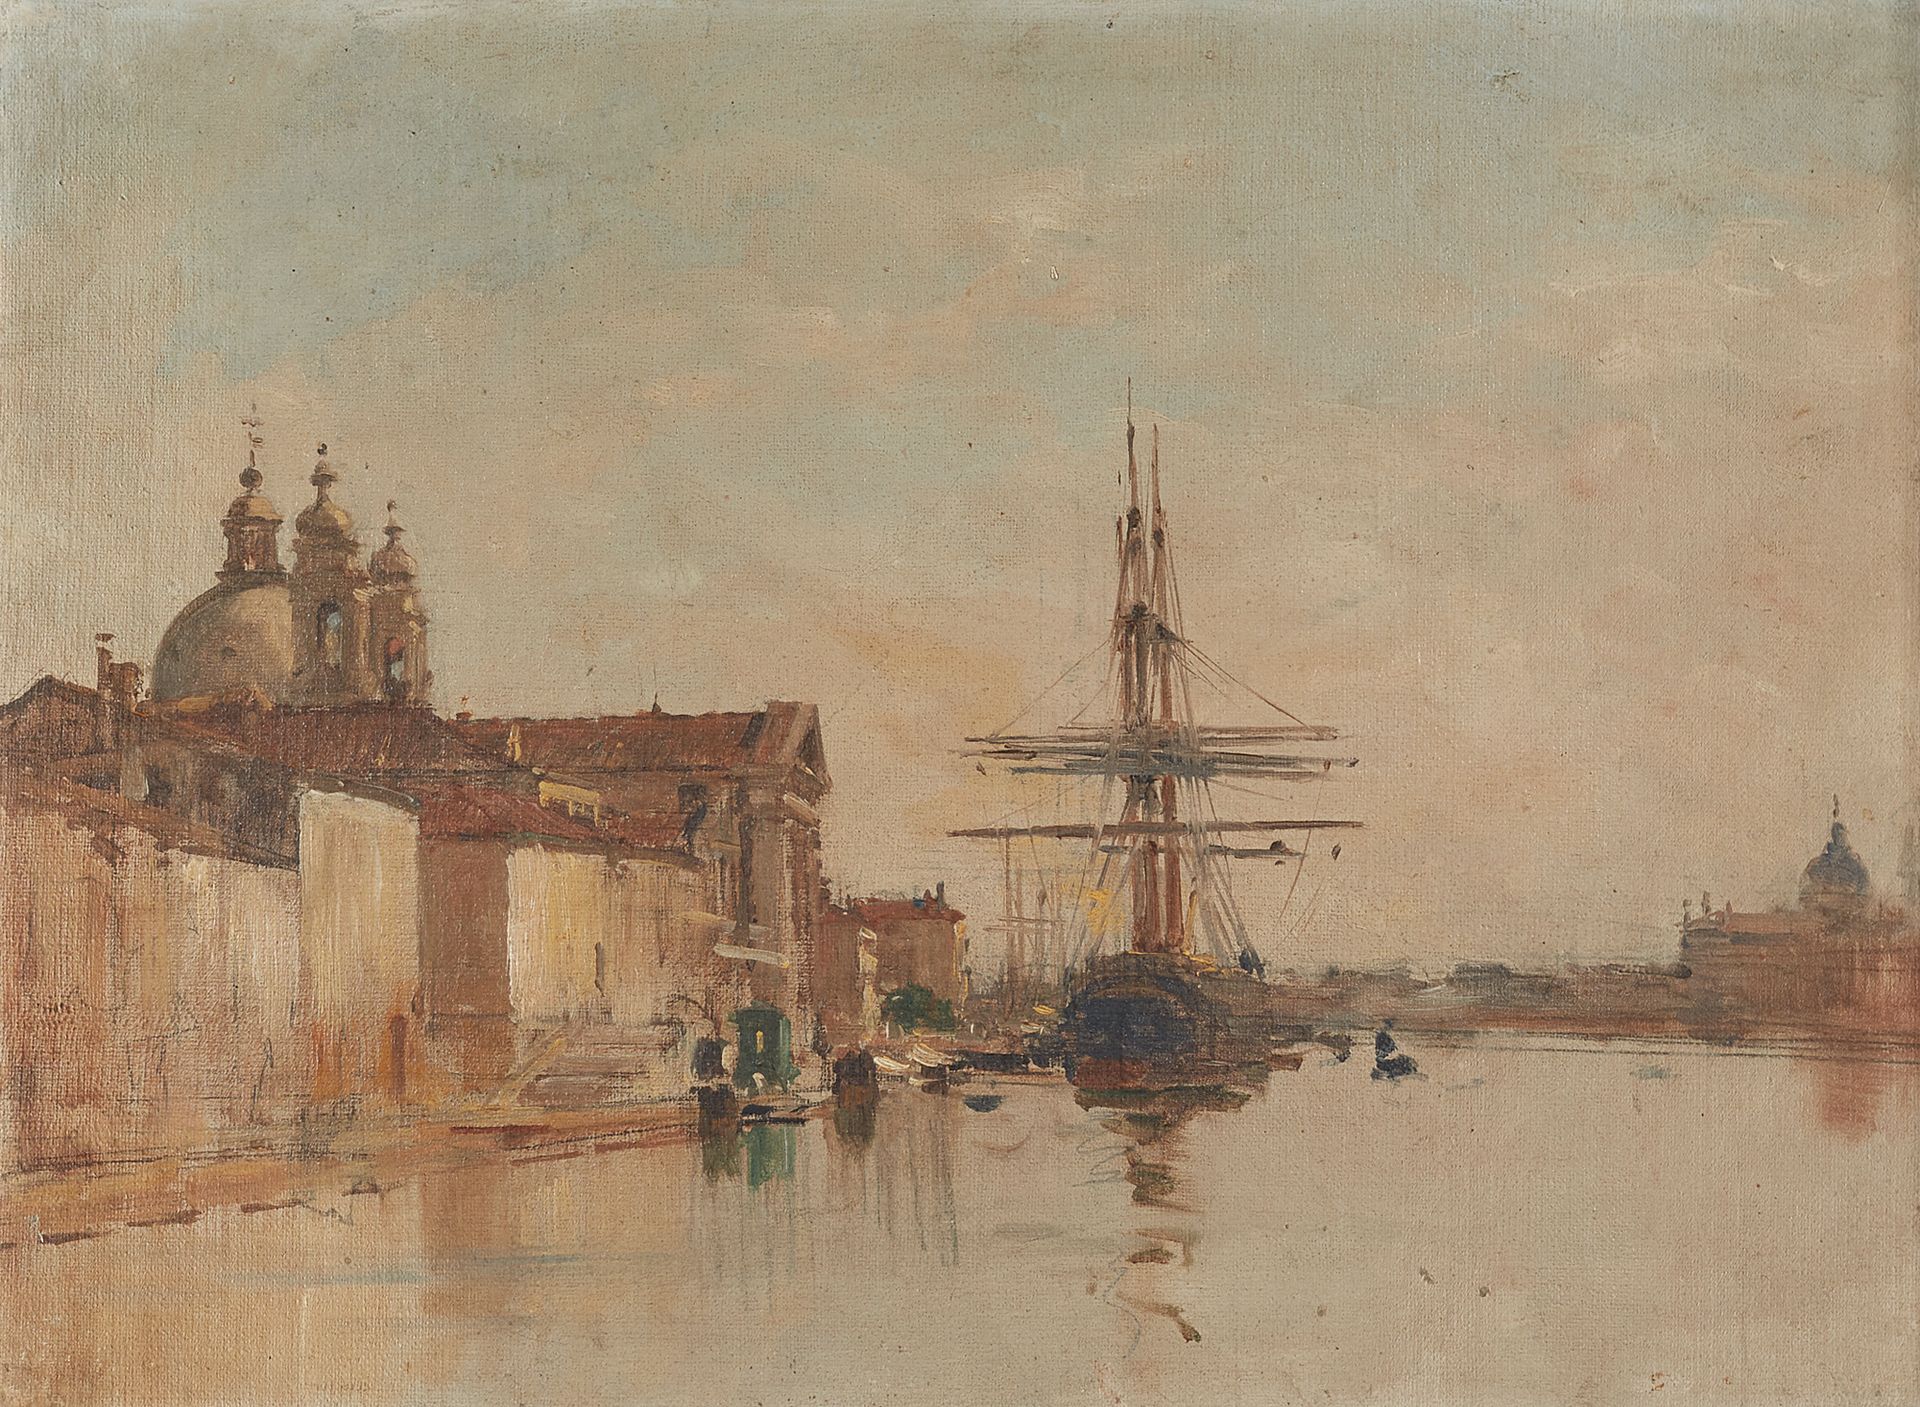 Charles LAPOSTOLET (1824-1890) 码头上的船
布面油画，无签名
36 x 35 cm